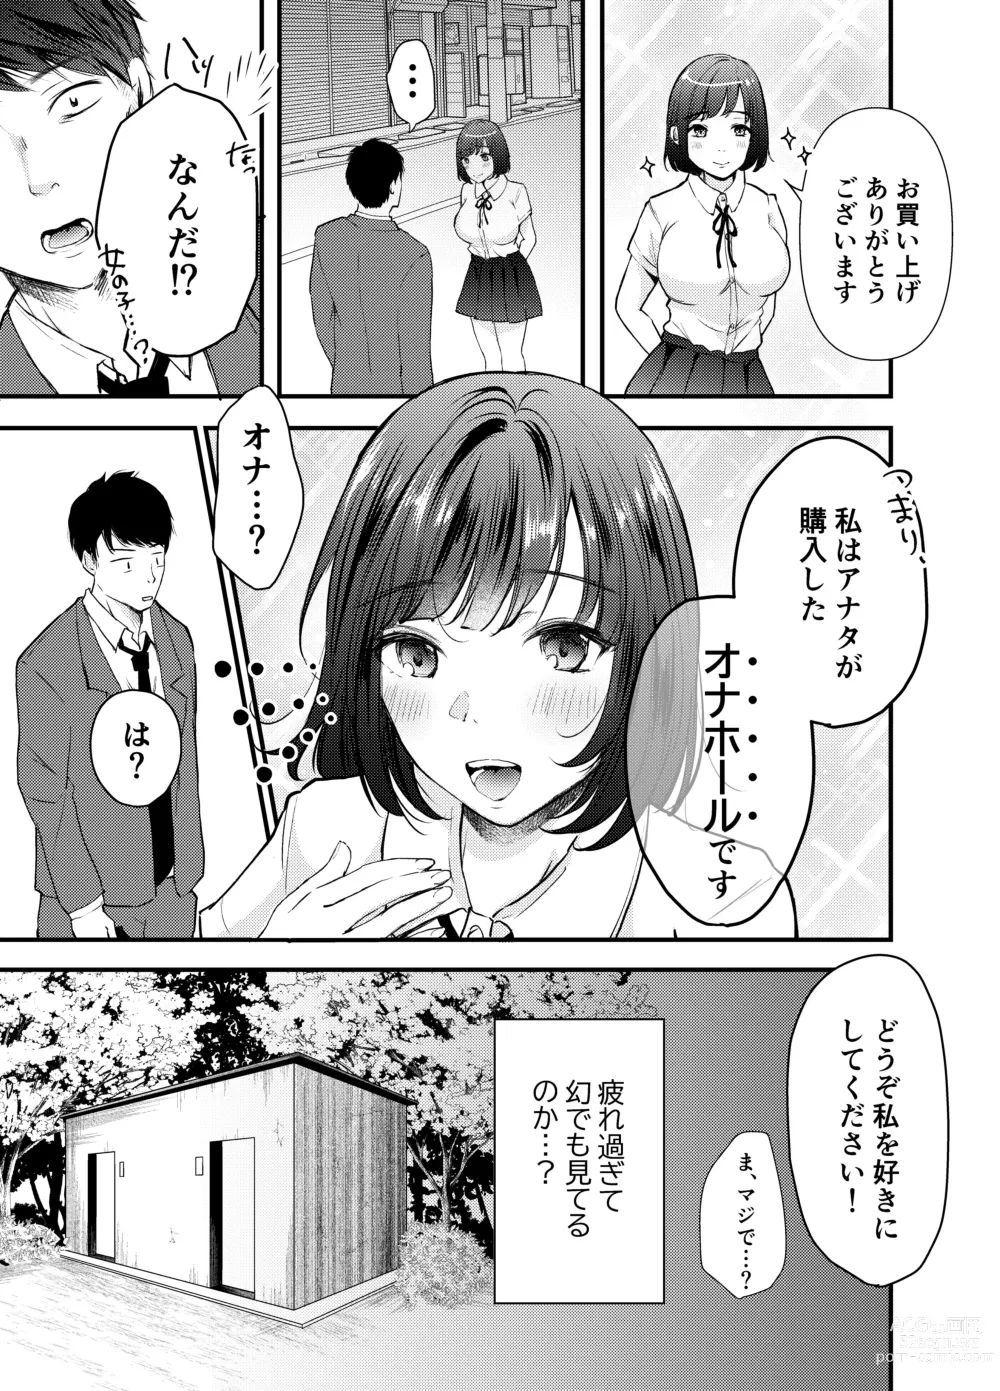 Page 6 of doujinshi Manko Jihanki